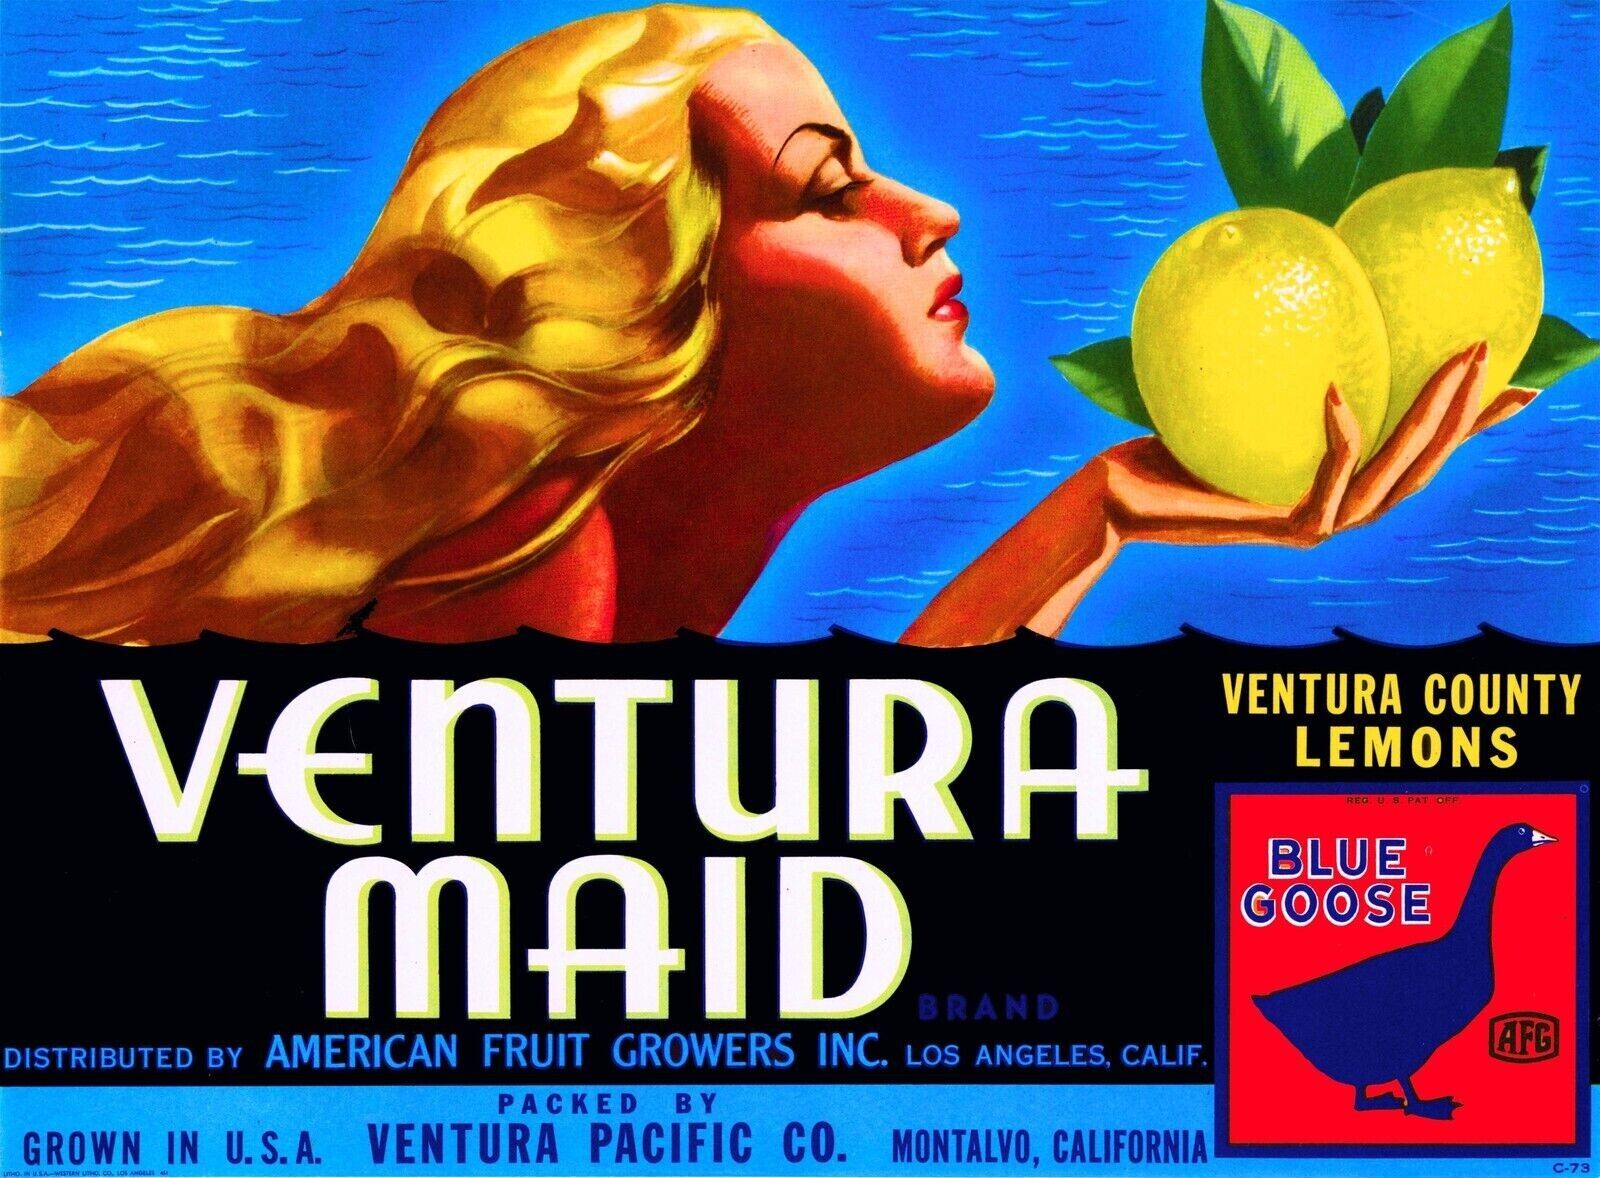 Ventura Maid Brand Lemon Montalvo Santa Barbara Citrus Fruit Crate Label 5x7